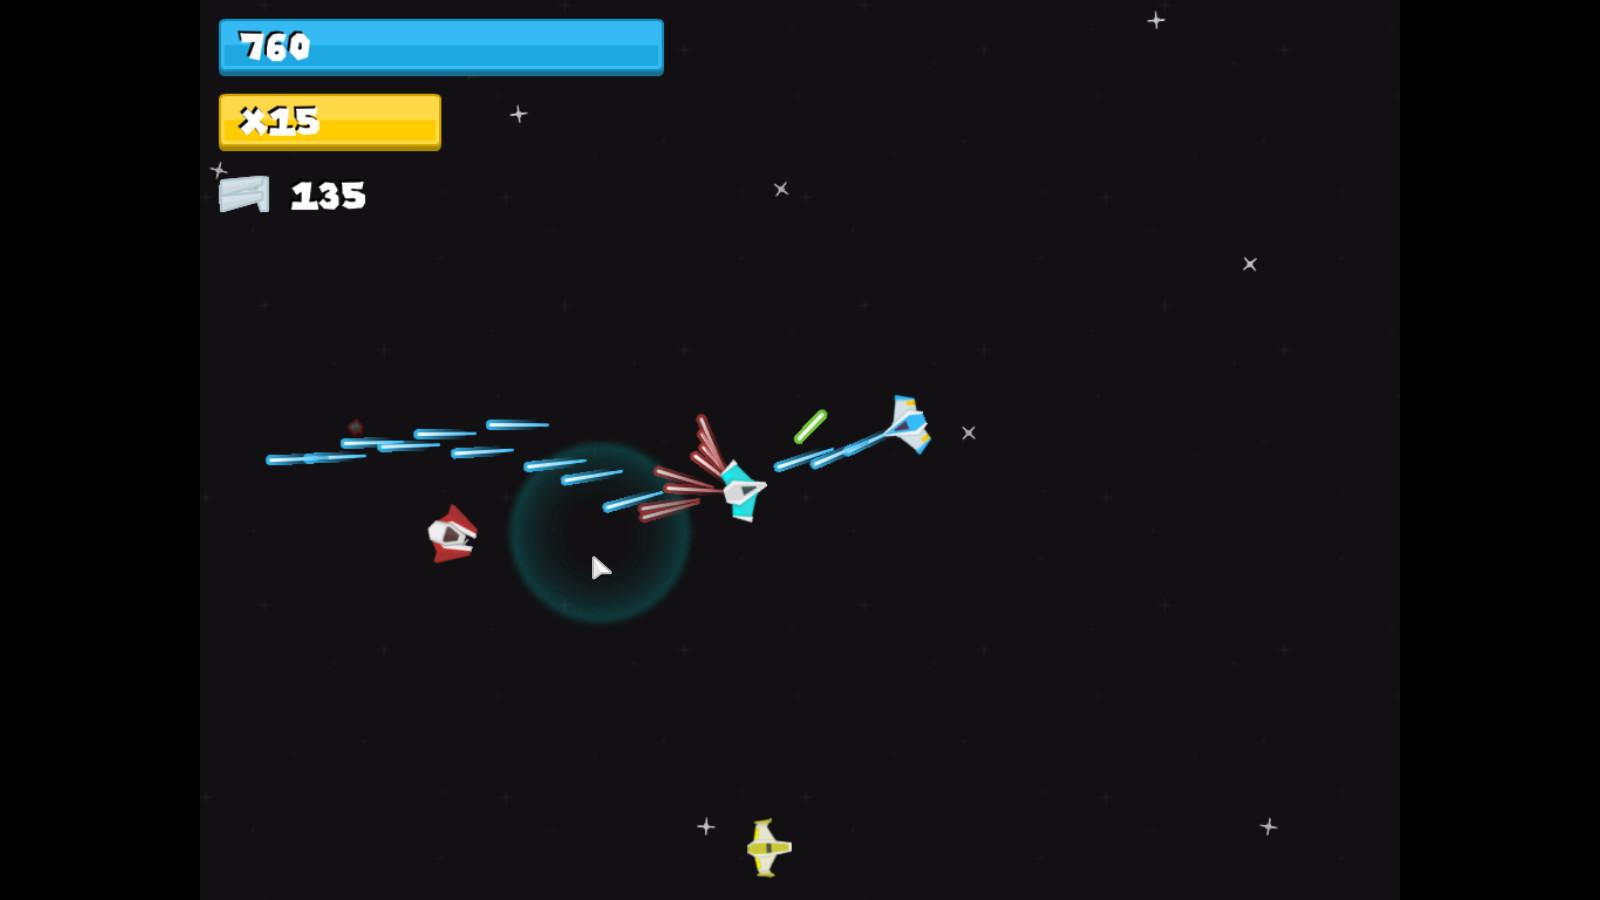 Screenshot №2 from game Gal-X-E